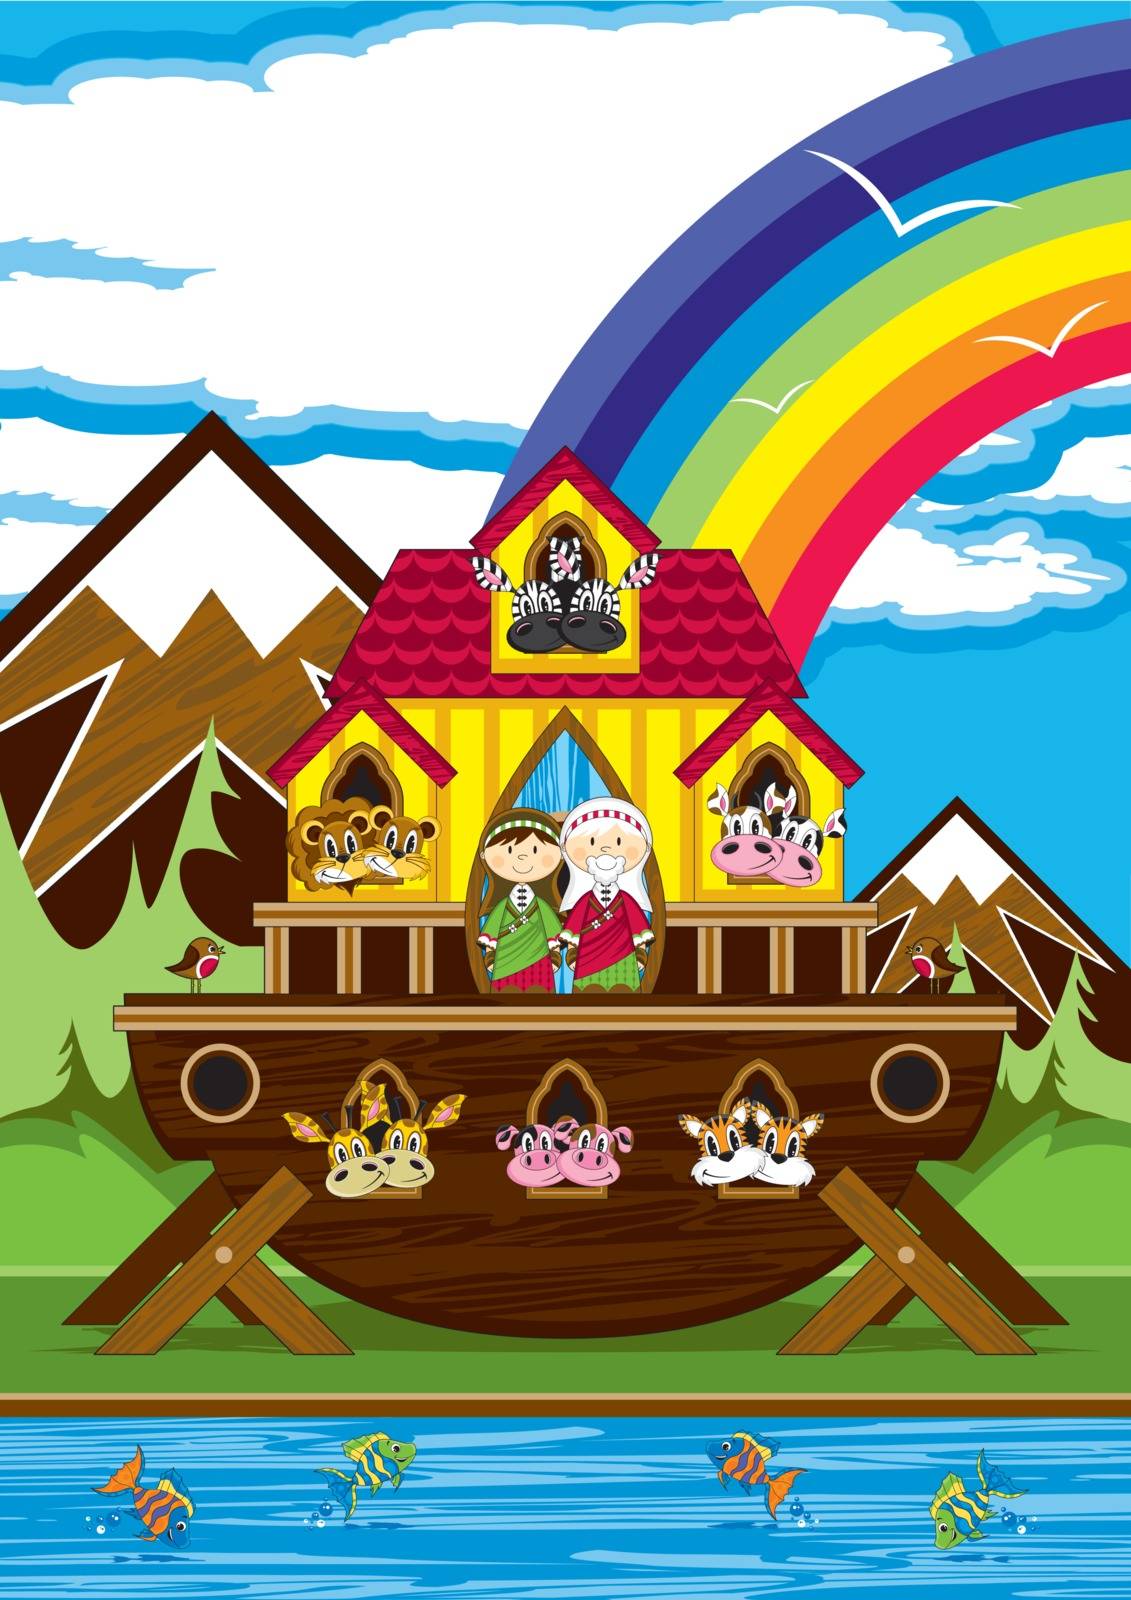 Cartoon Noah and the Ark with Animals by markmurphycreative